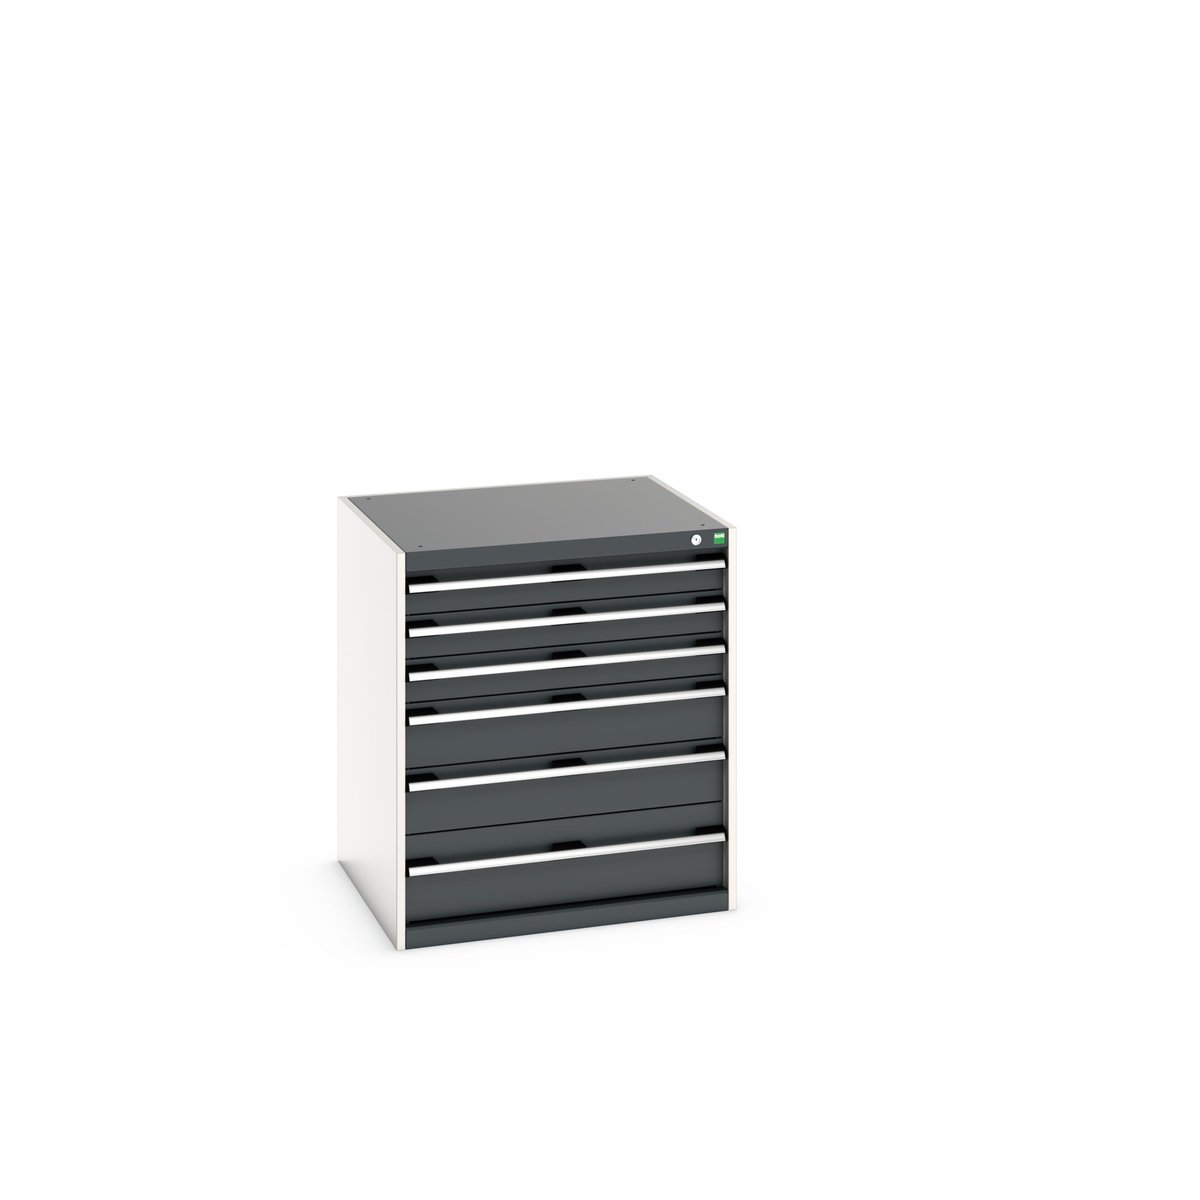 40028115. - cubio drawer cabinet